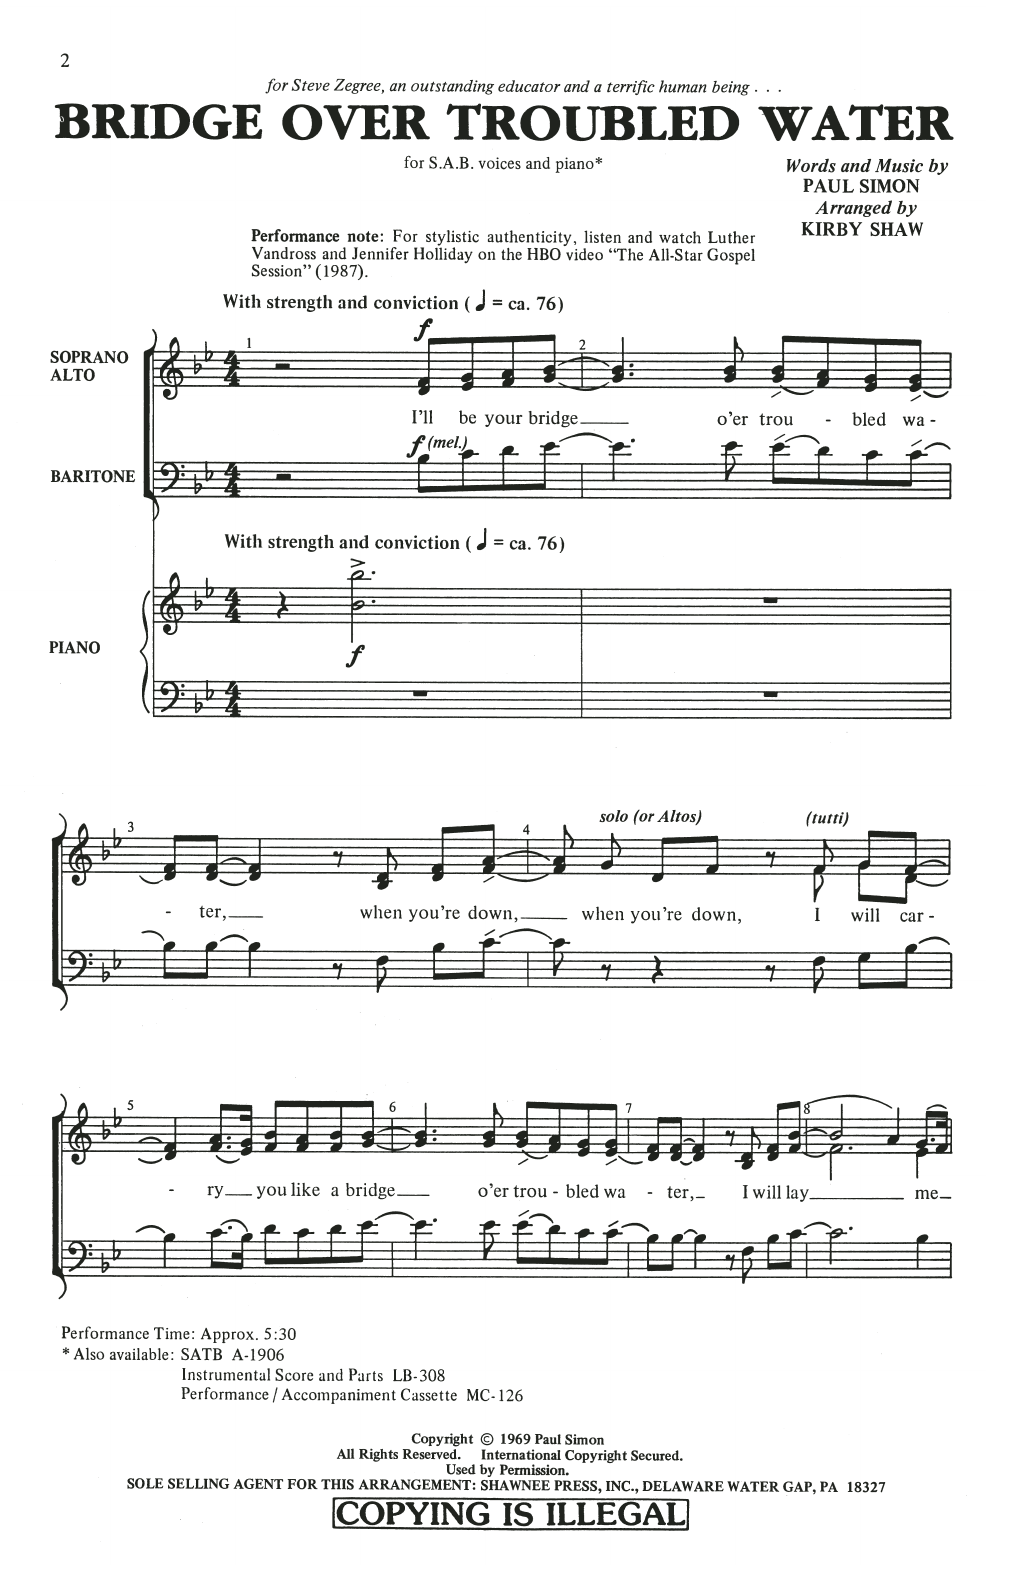 Simon & Garfunkel Bridge Over Troubled Water (arr. Kirby Shaw) Sheet Music Notes & Chords for TTBB Choir - Download or Print PDF